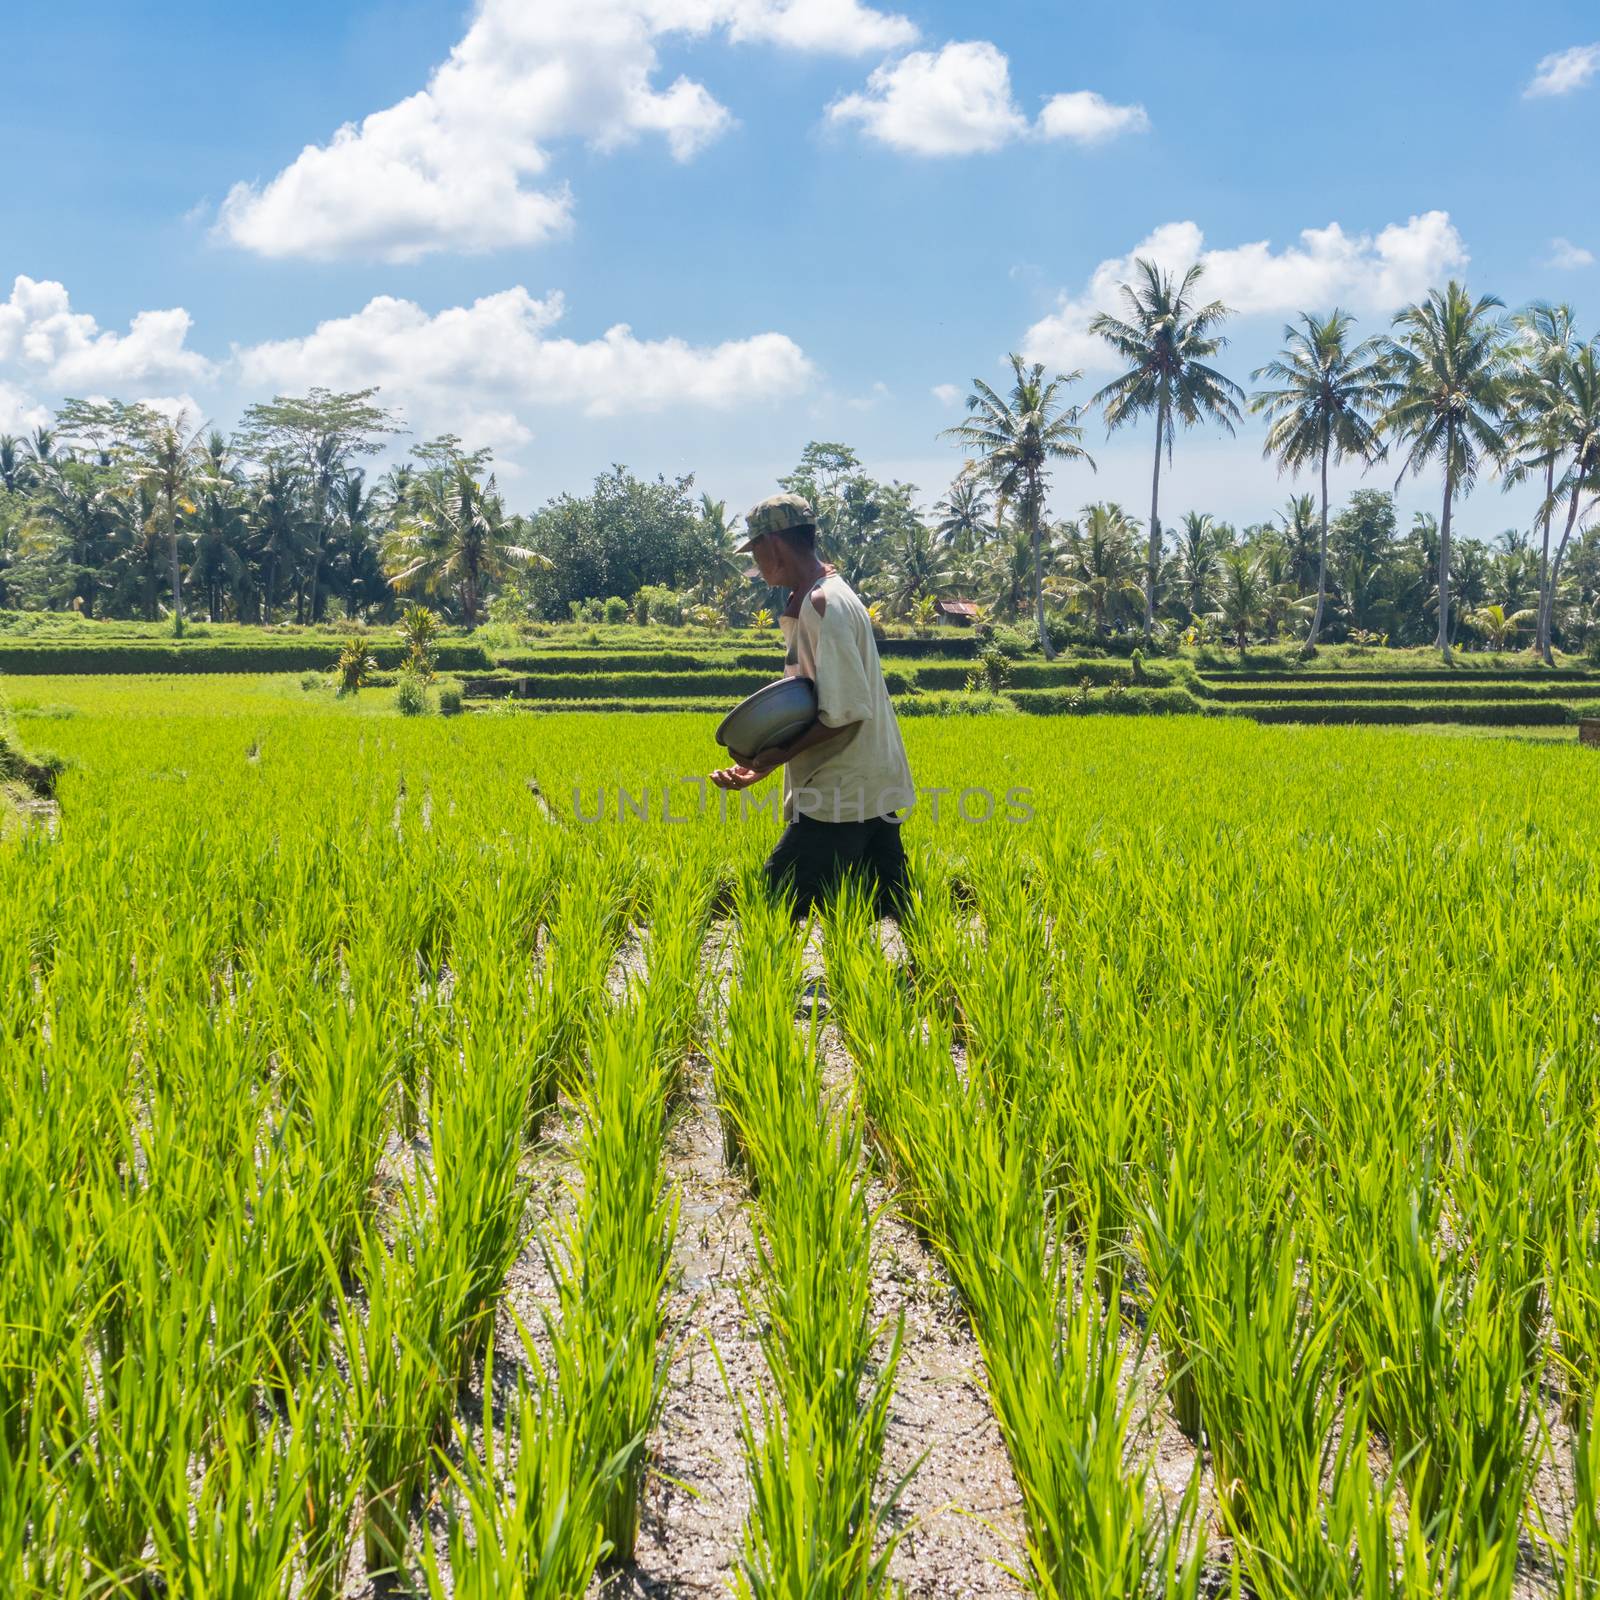 Male farmer working in beautiful rice terrace plantation near Ubud,Bali, Indonesia, south east Asia by kasto